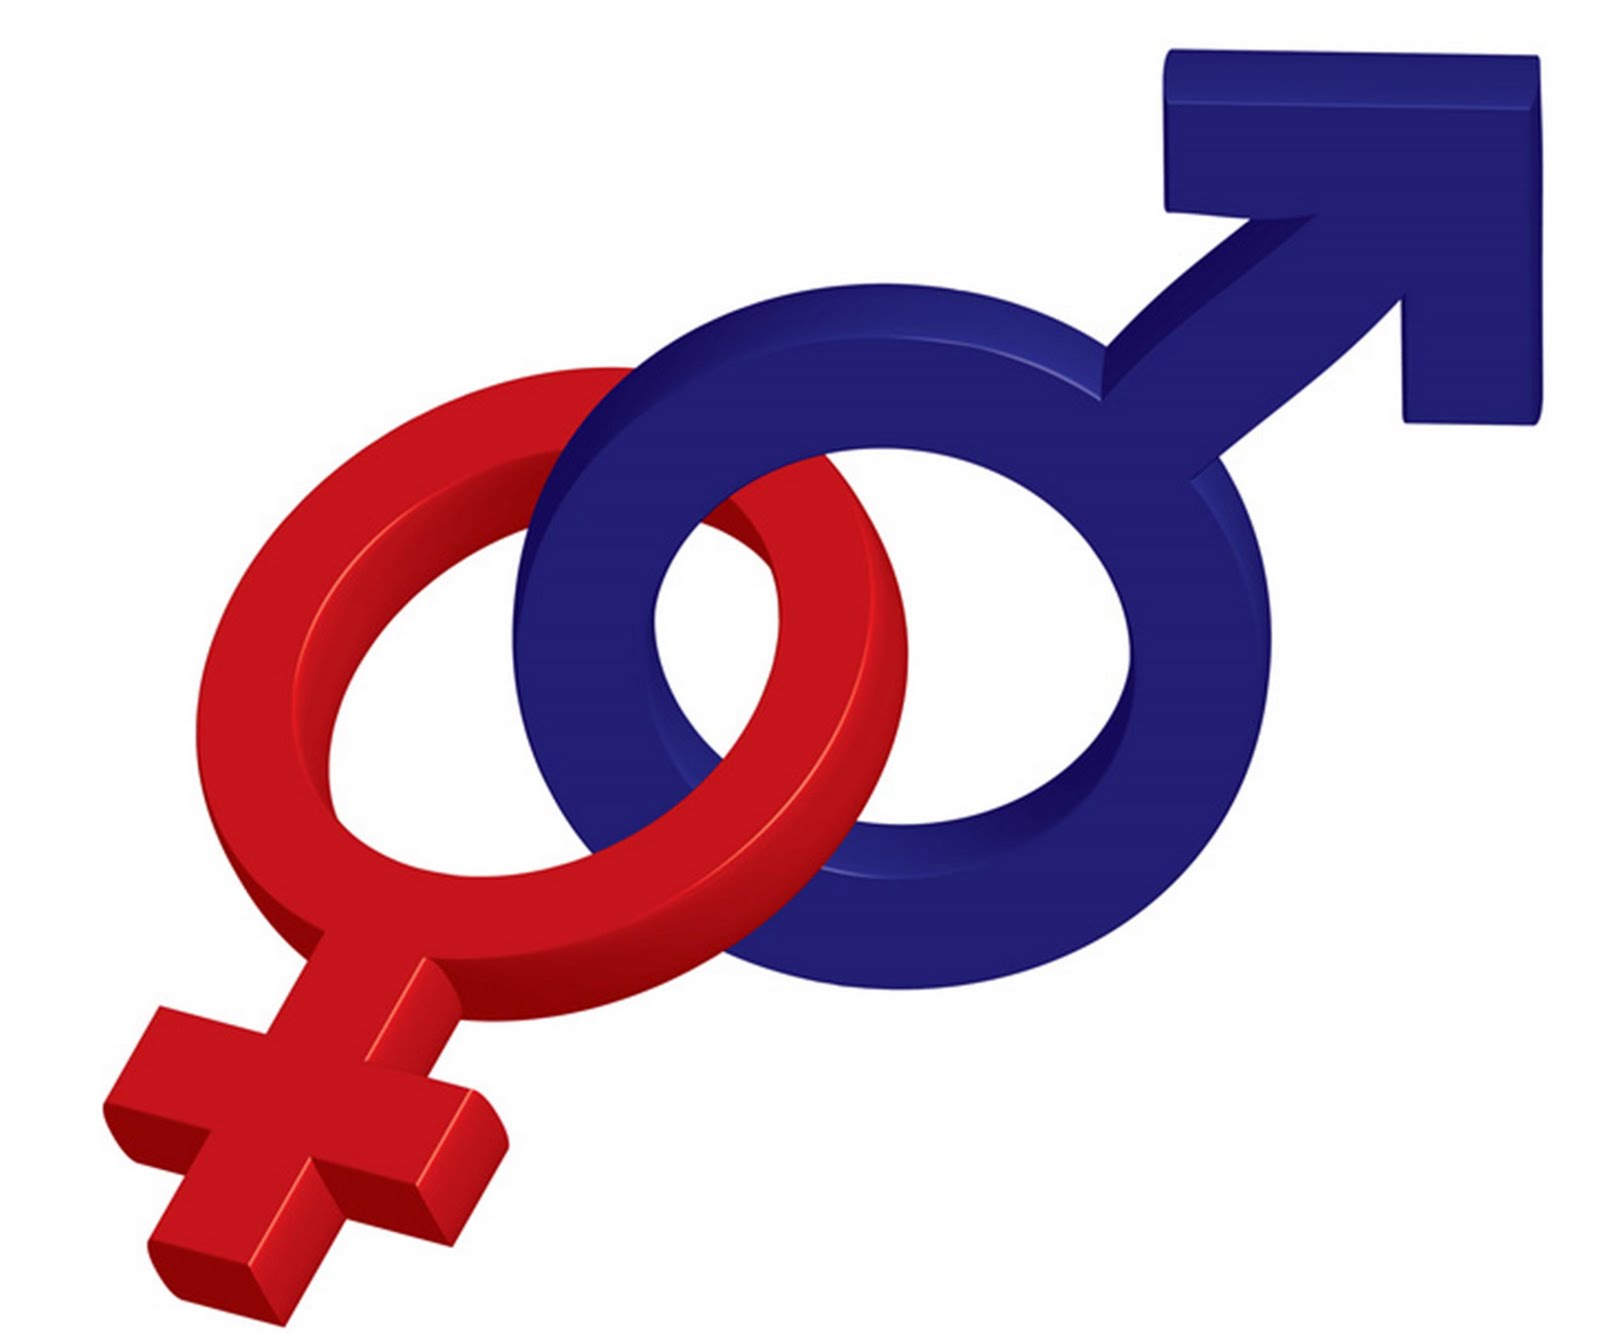 male female symbol